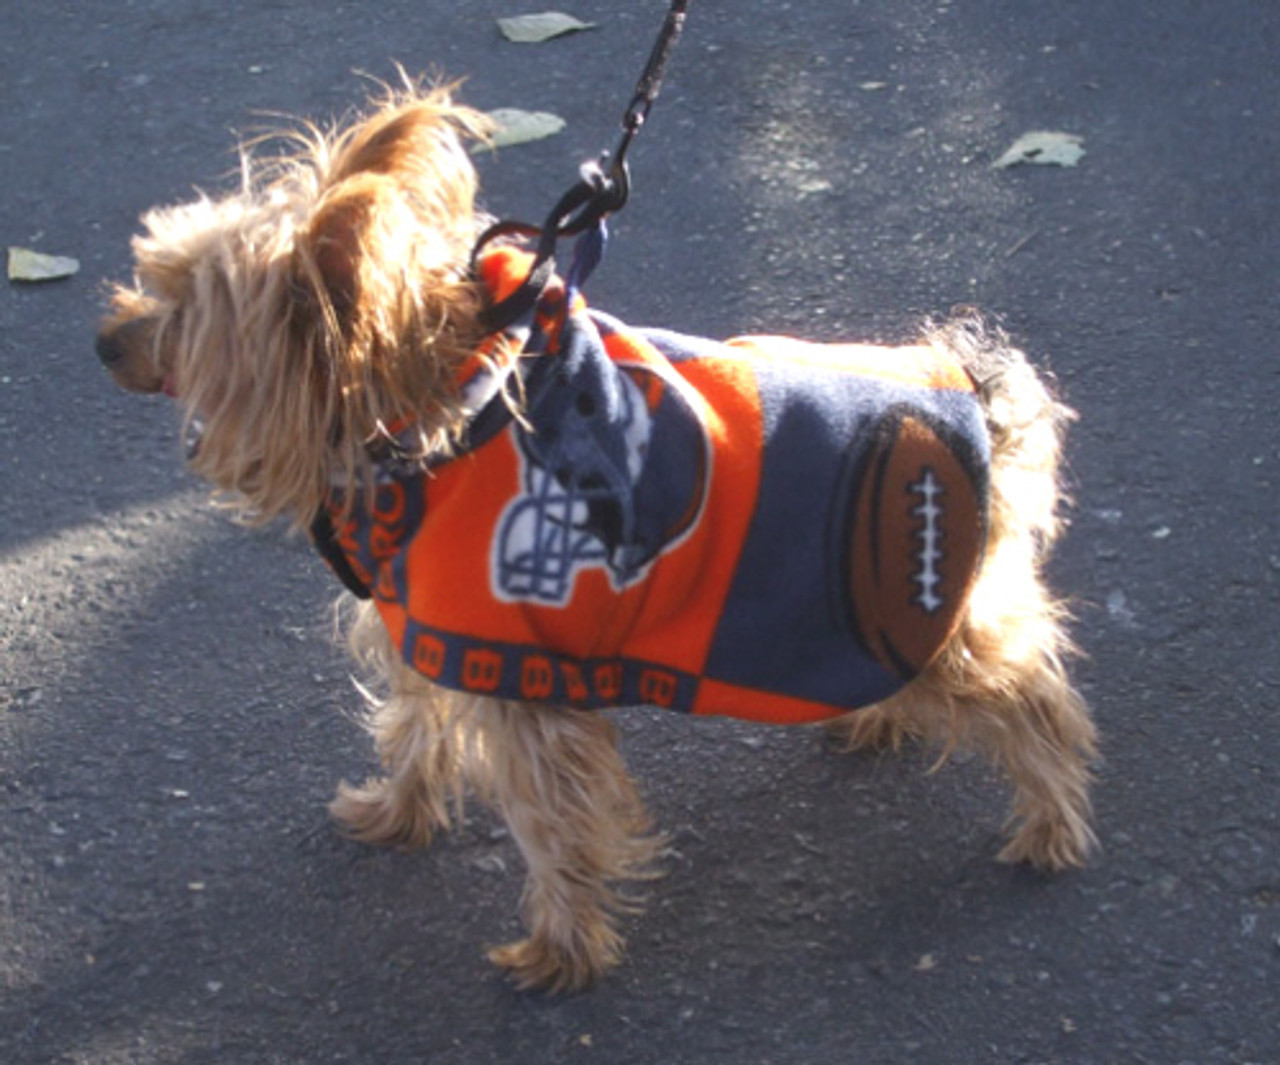 custom dog jerseys nfl